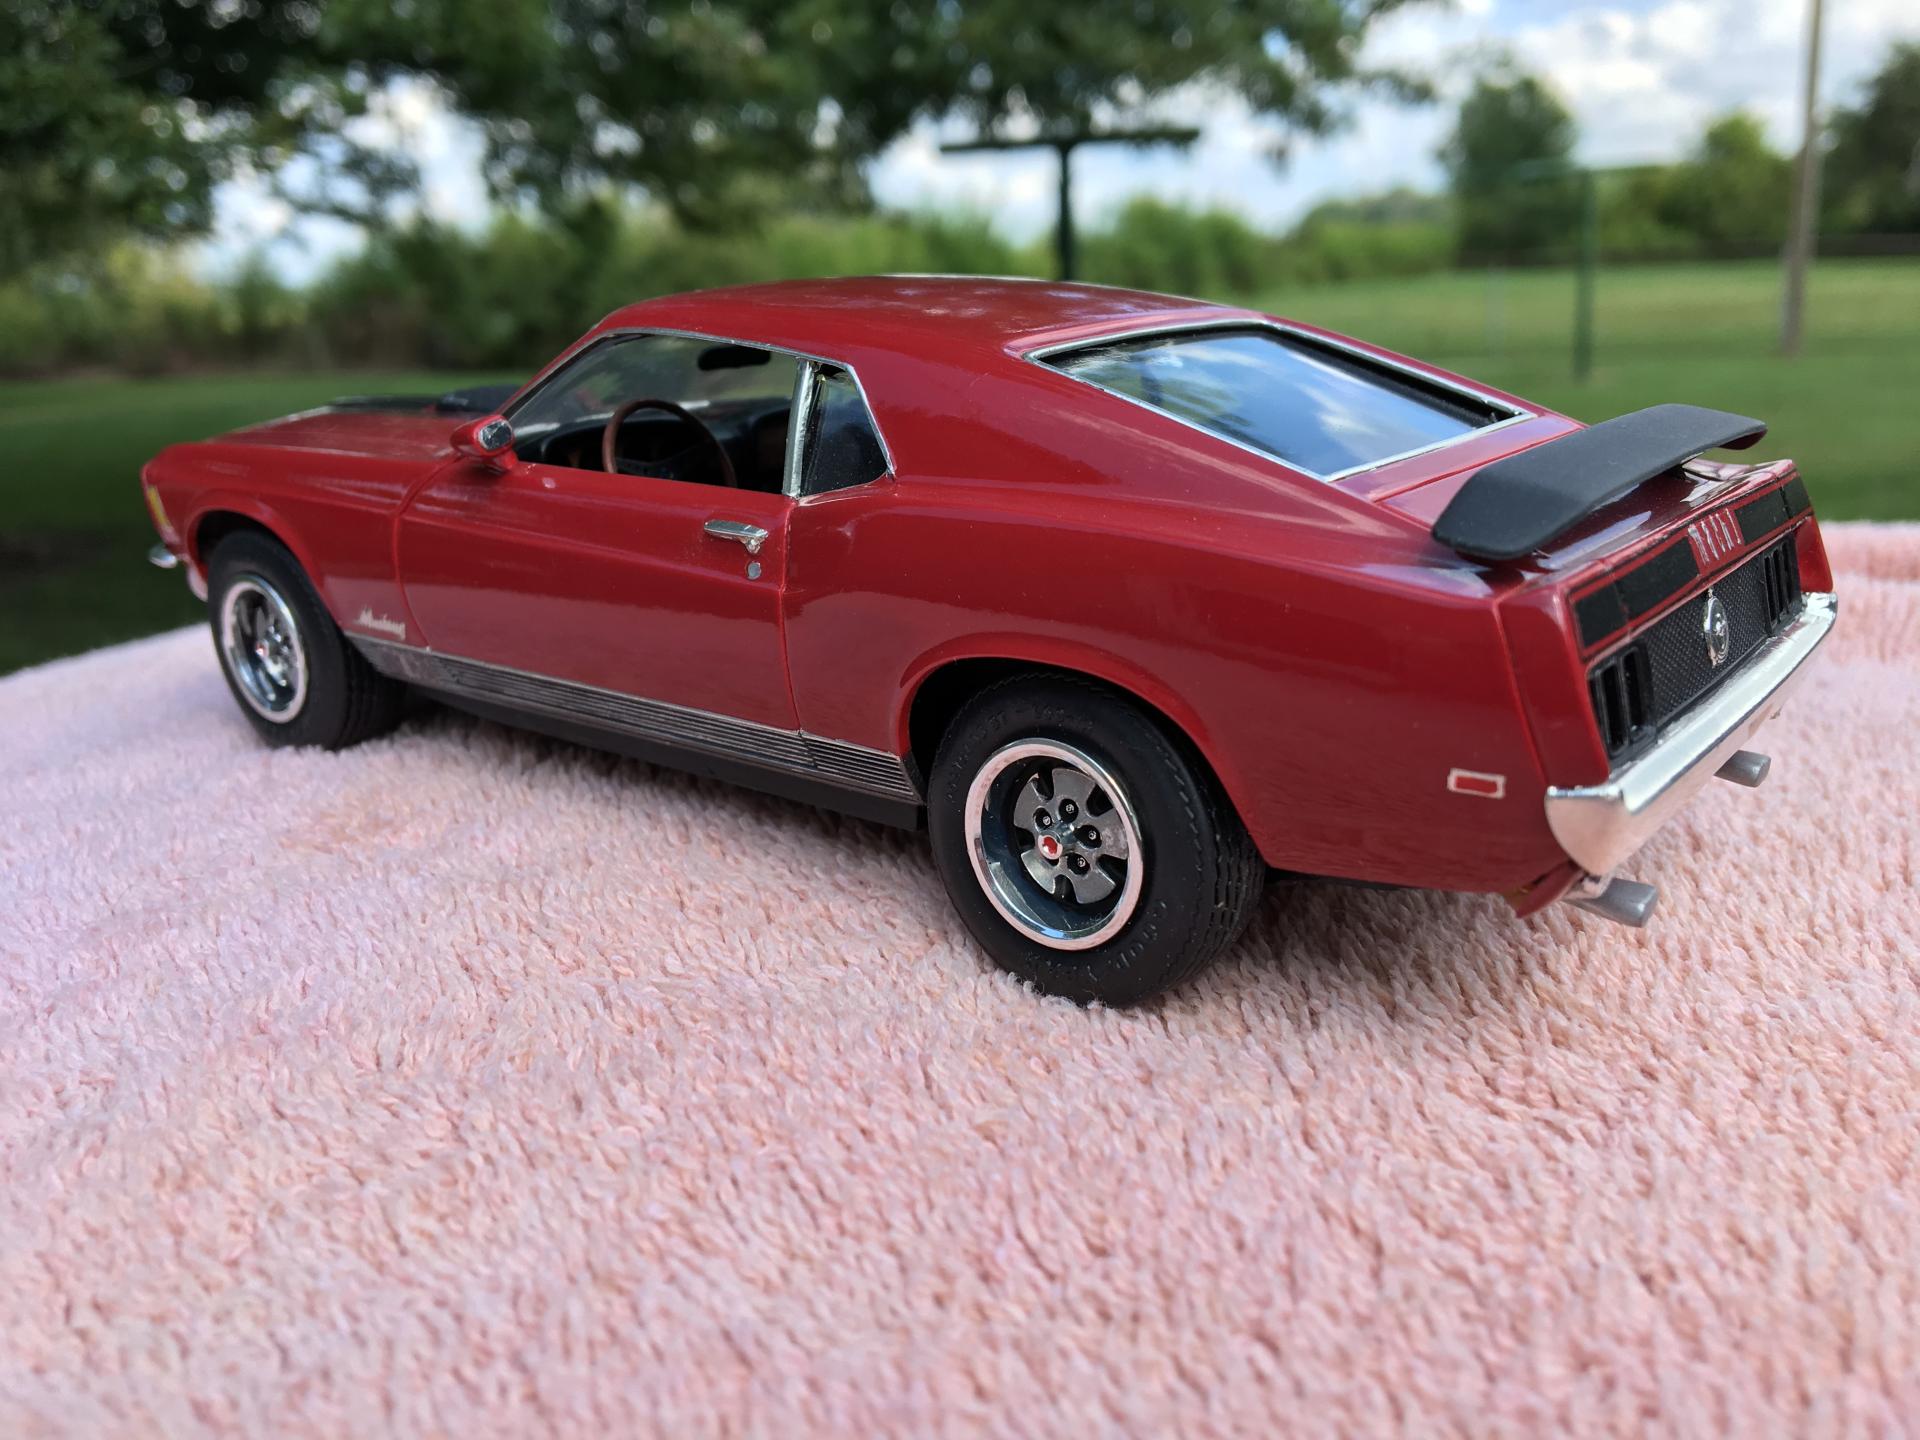 1970 Mustang Mach1 - Model Cars - Model Cars Magazine Forum